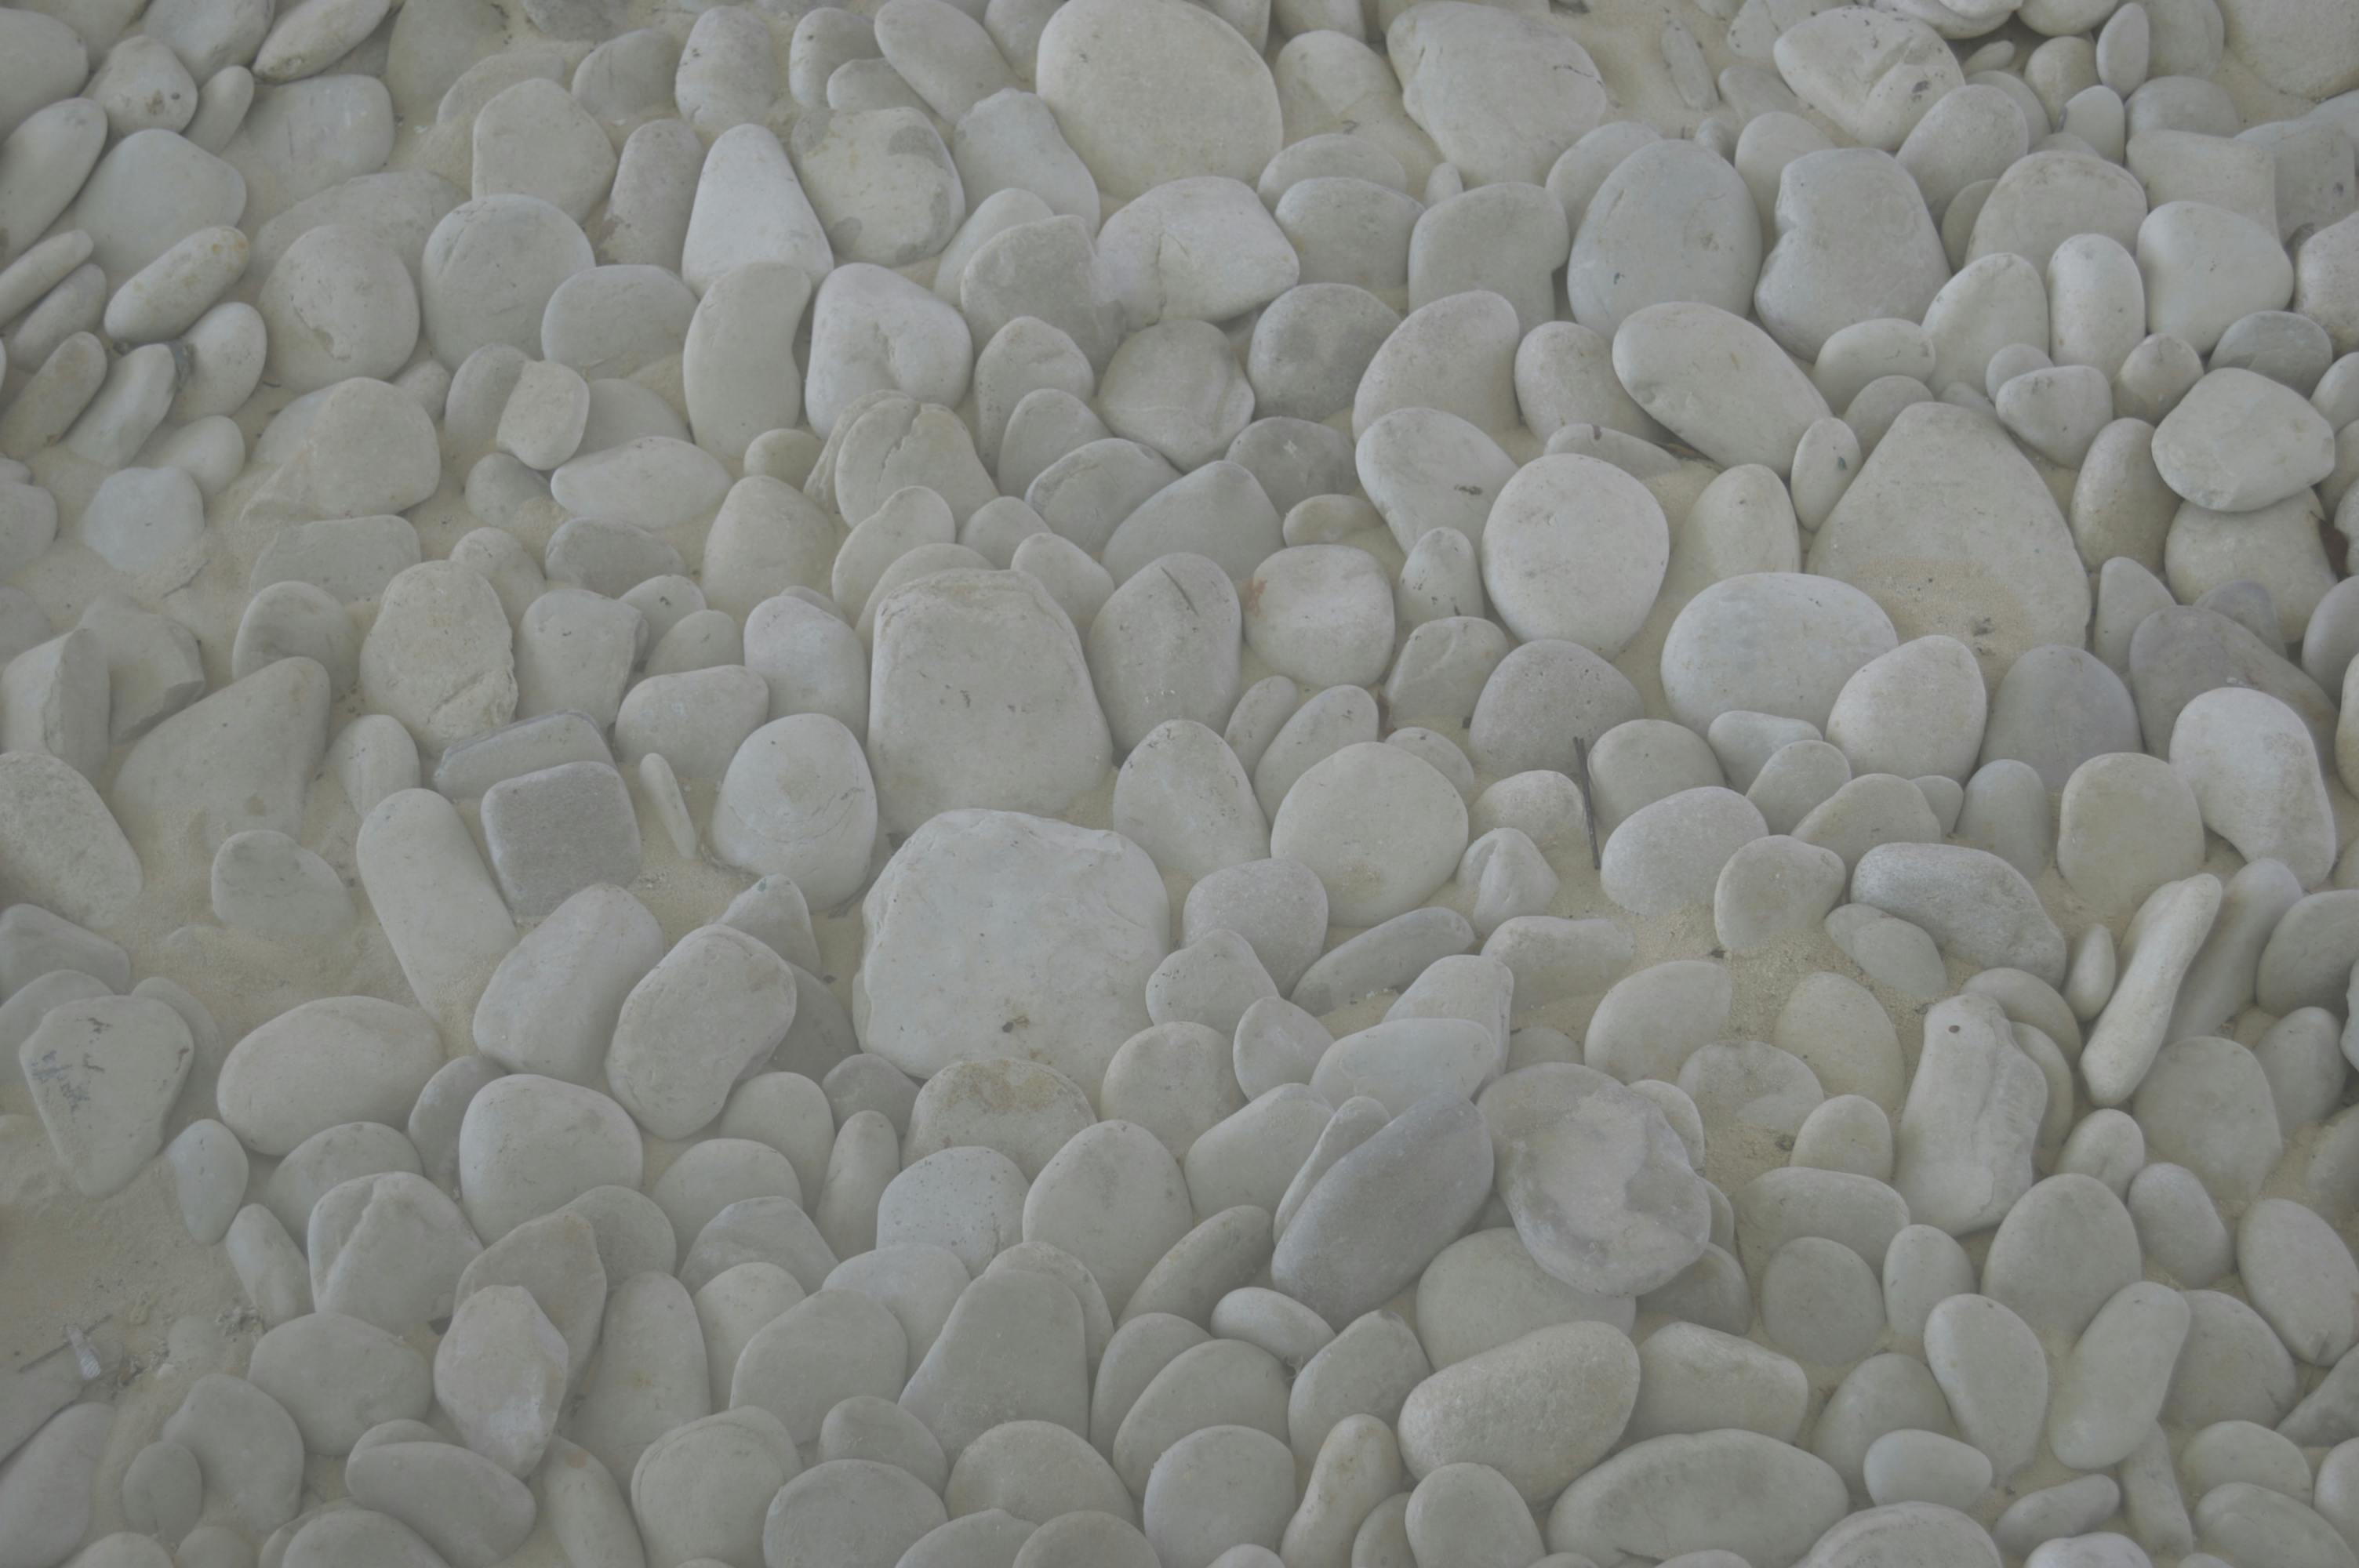 Free stock photo of rocks, white rocks